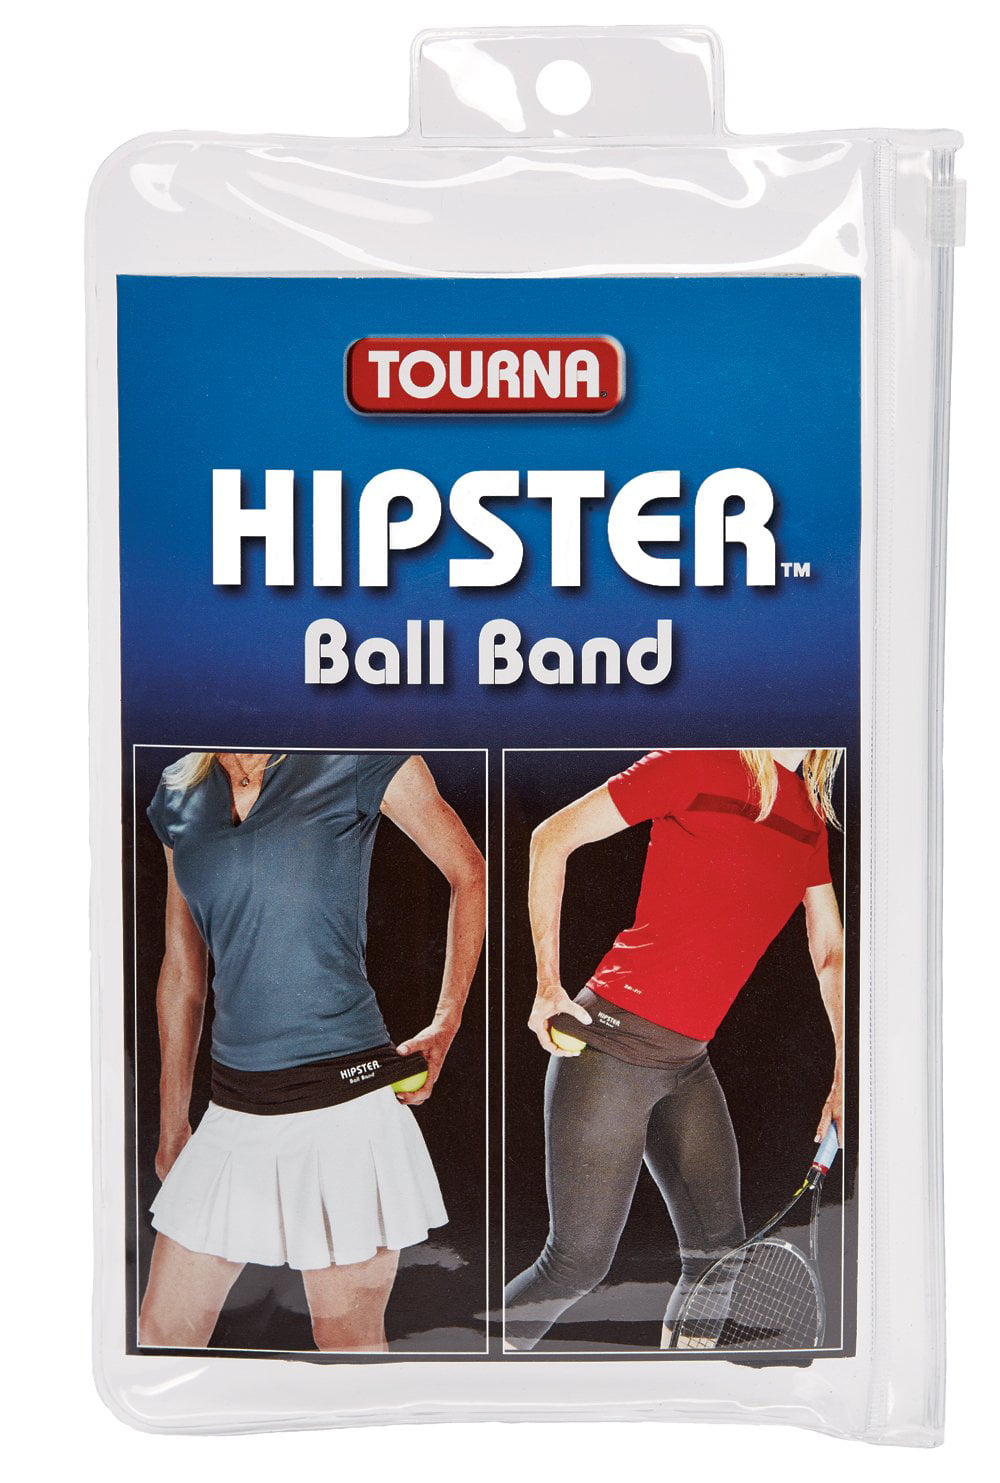 Tourna Hipster Ball Band for Holding Tennis Balls and Pickleballs 